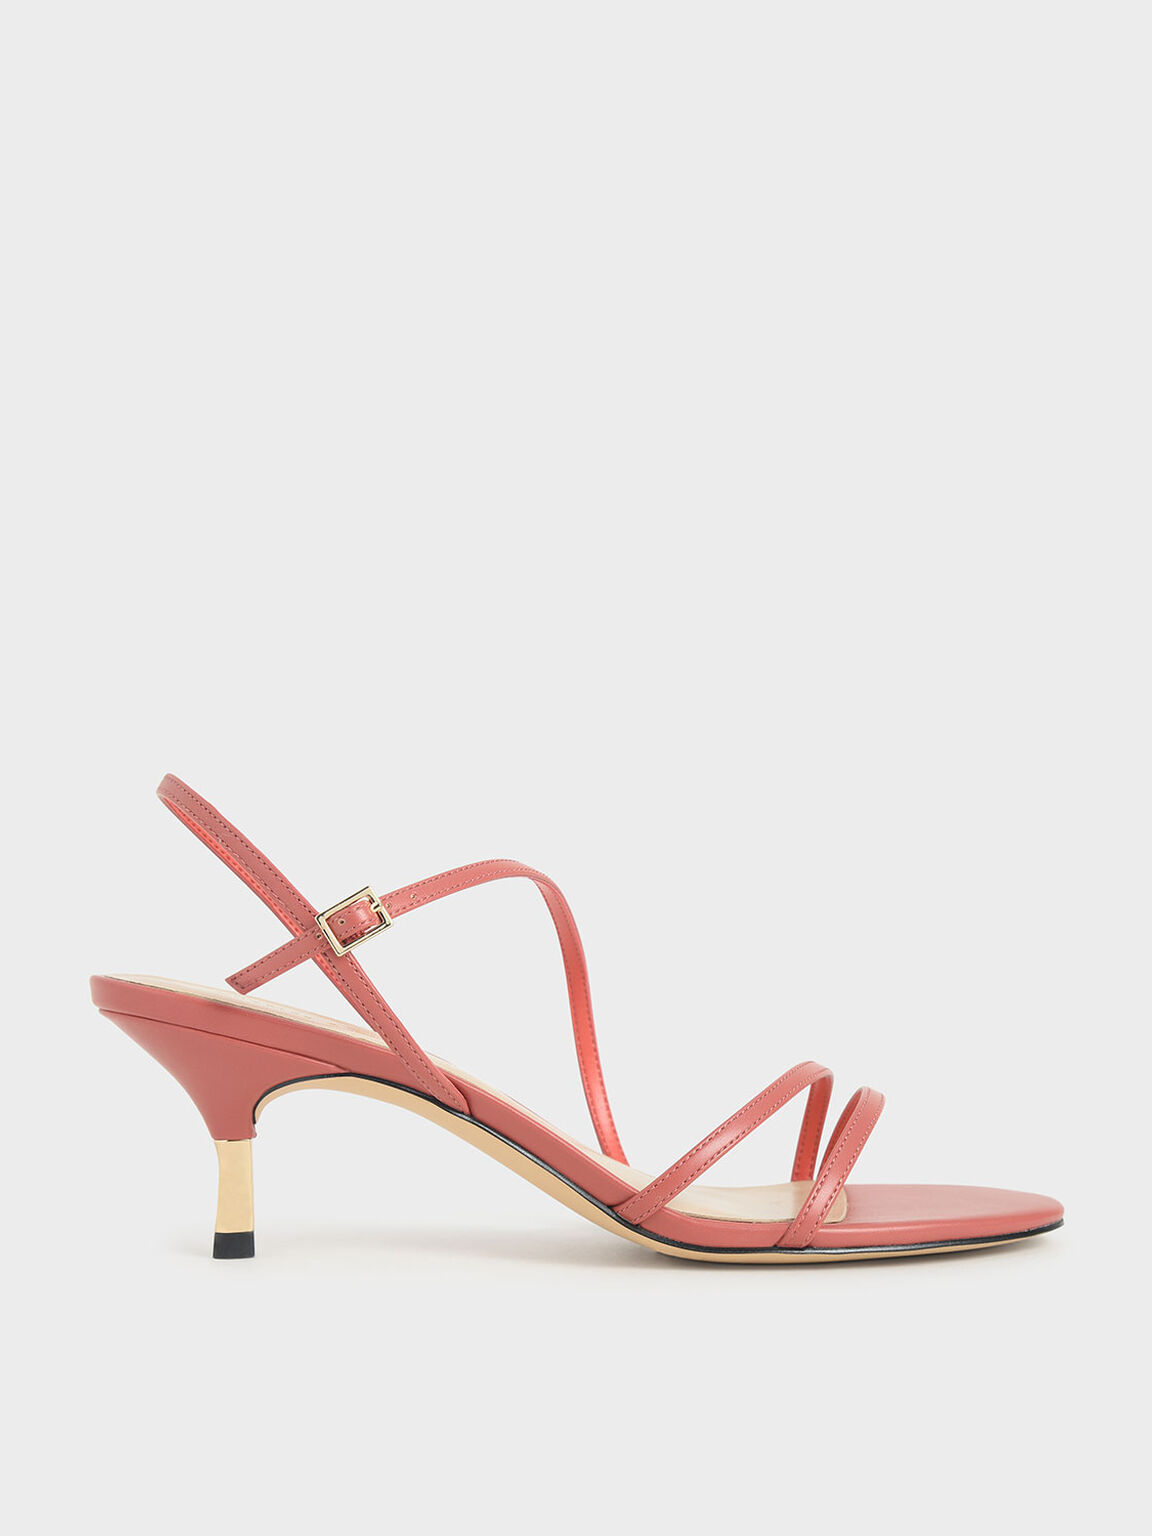 Sandal Strappy Metallic Heel, Coral Pink, hi-res